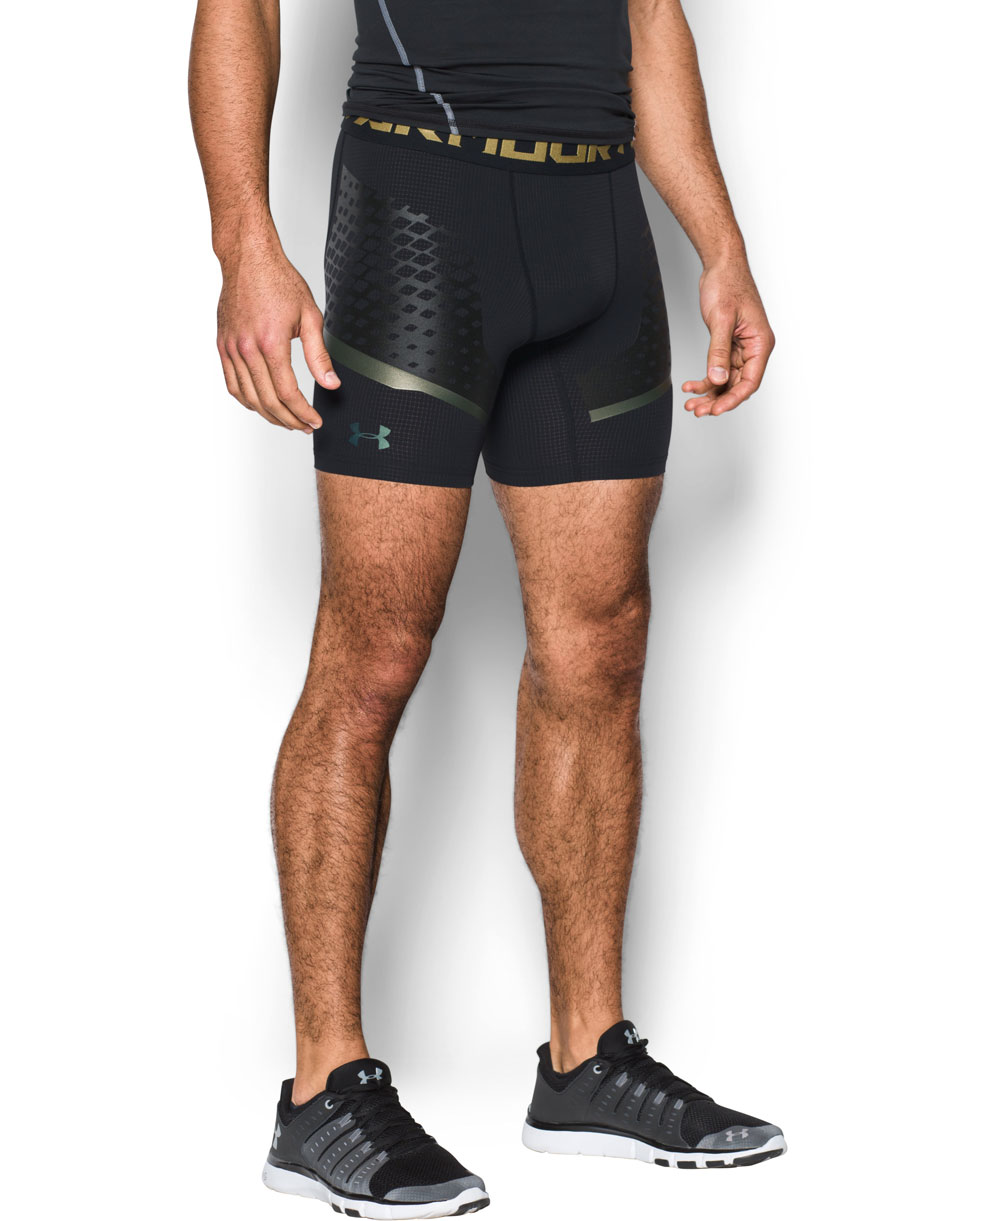 compression shorts under shorts